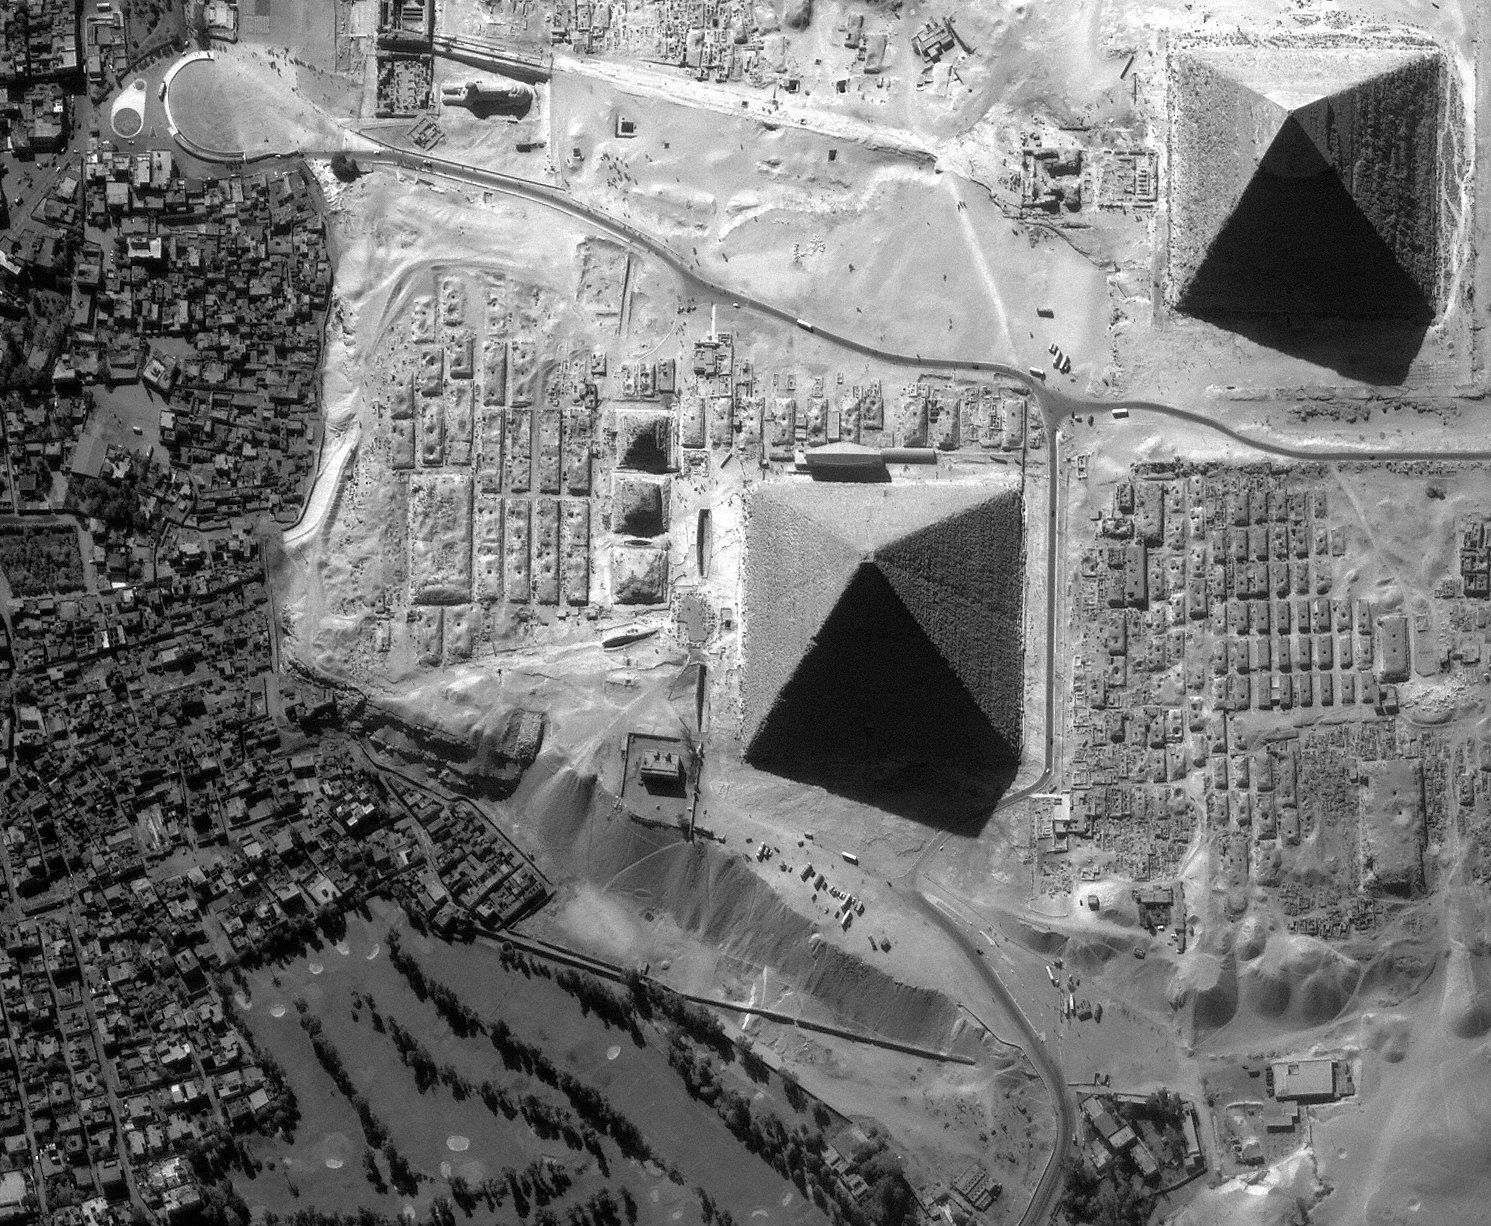 La grande pyramide de Gizeh a huit faces